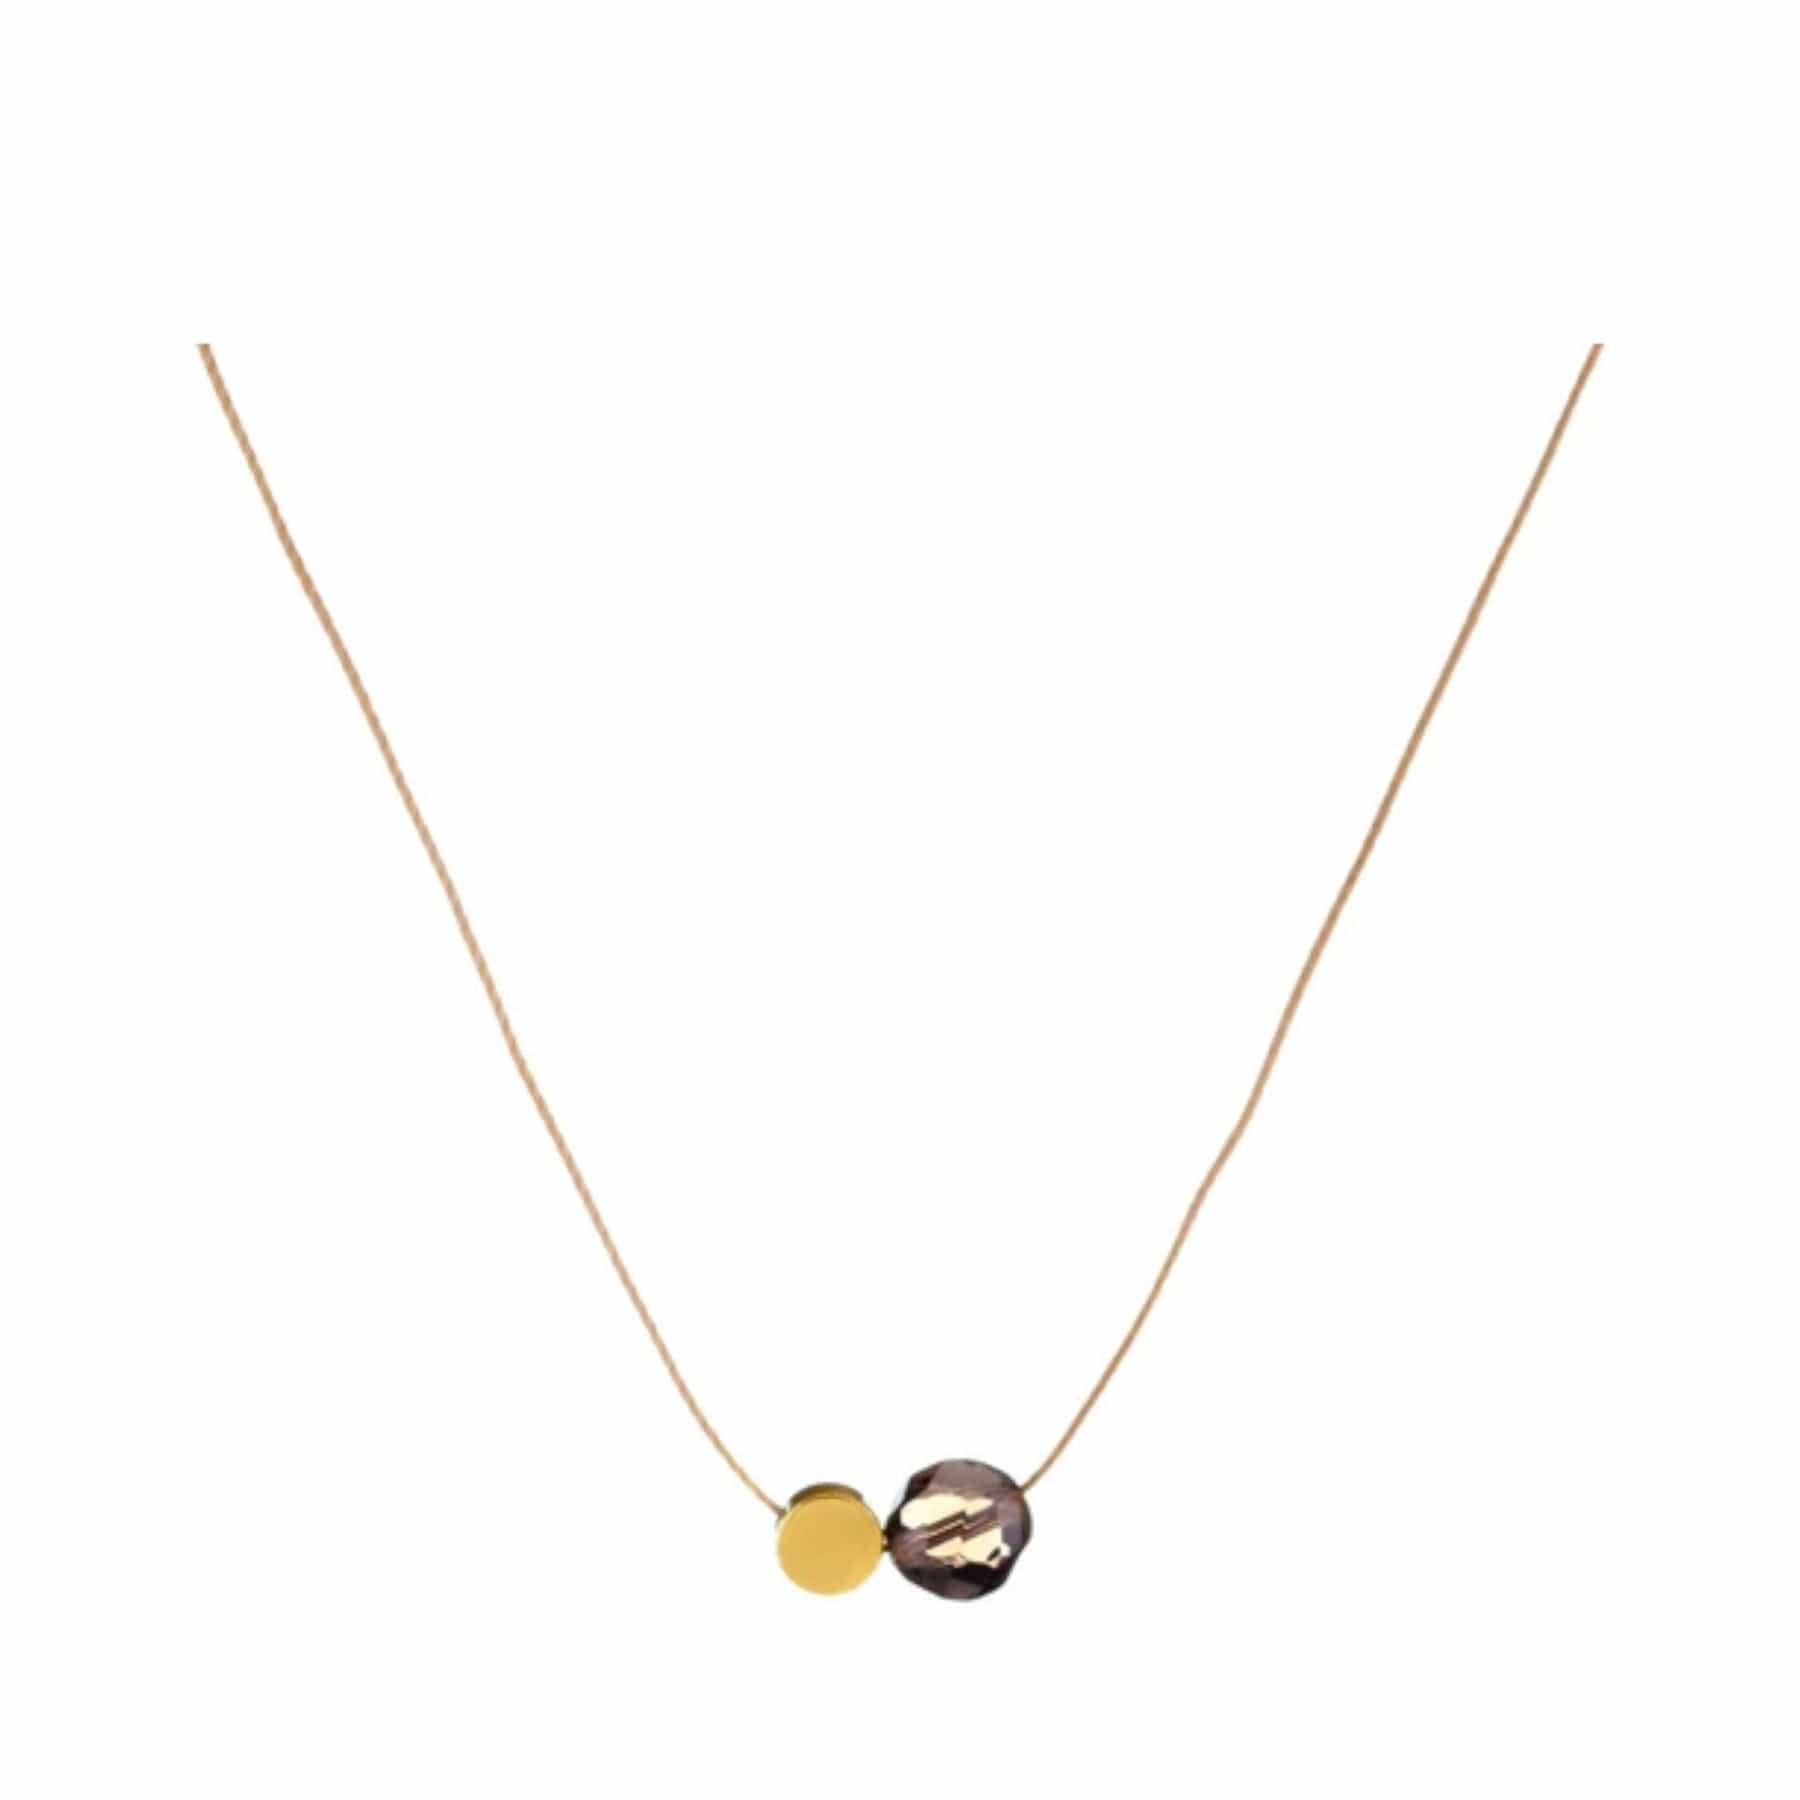 Smokey-quartz cord necklace